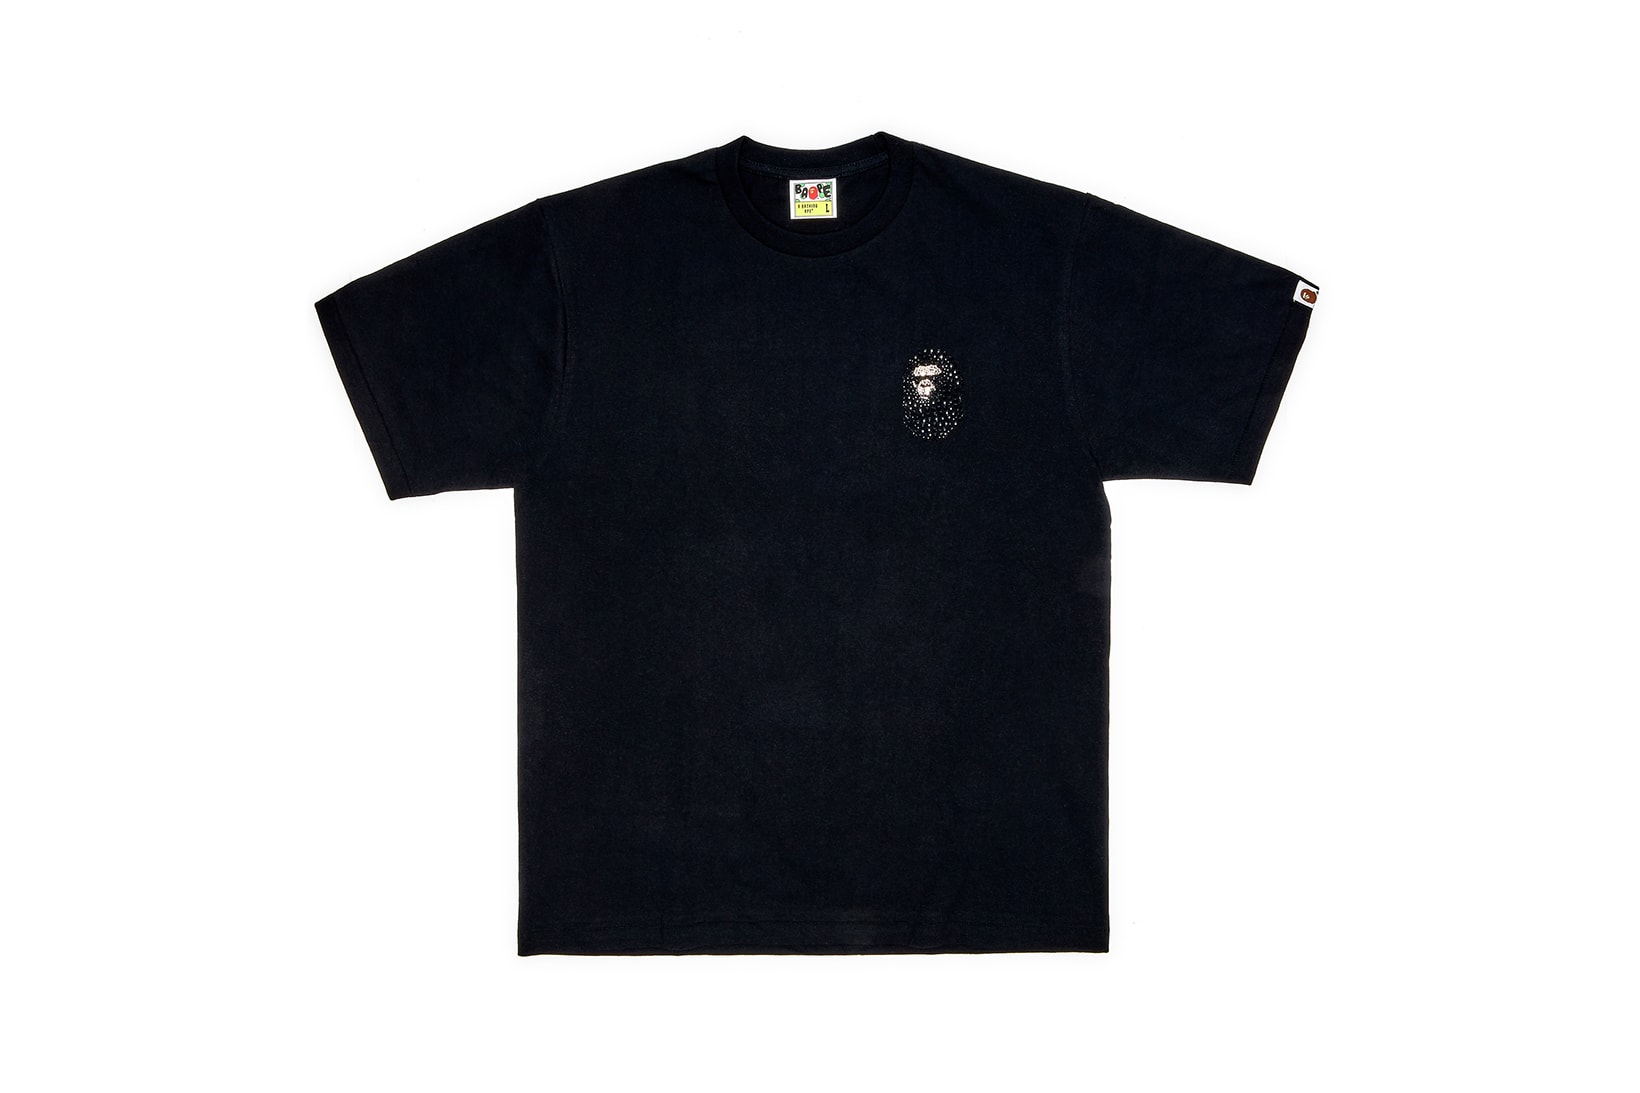 Dover Street Market Monochromarket Anniversary Collection BAPE T-Shirt Black